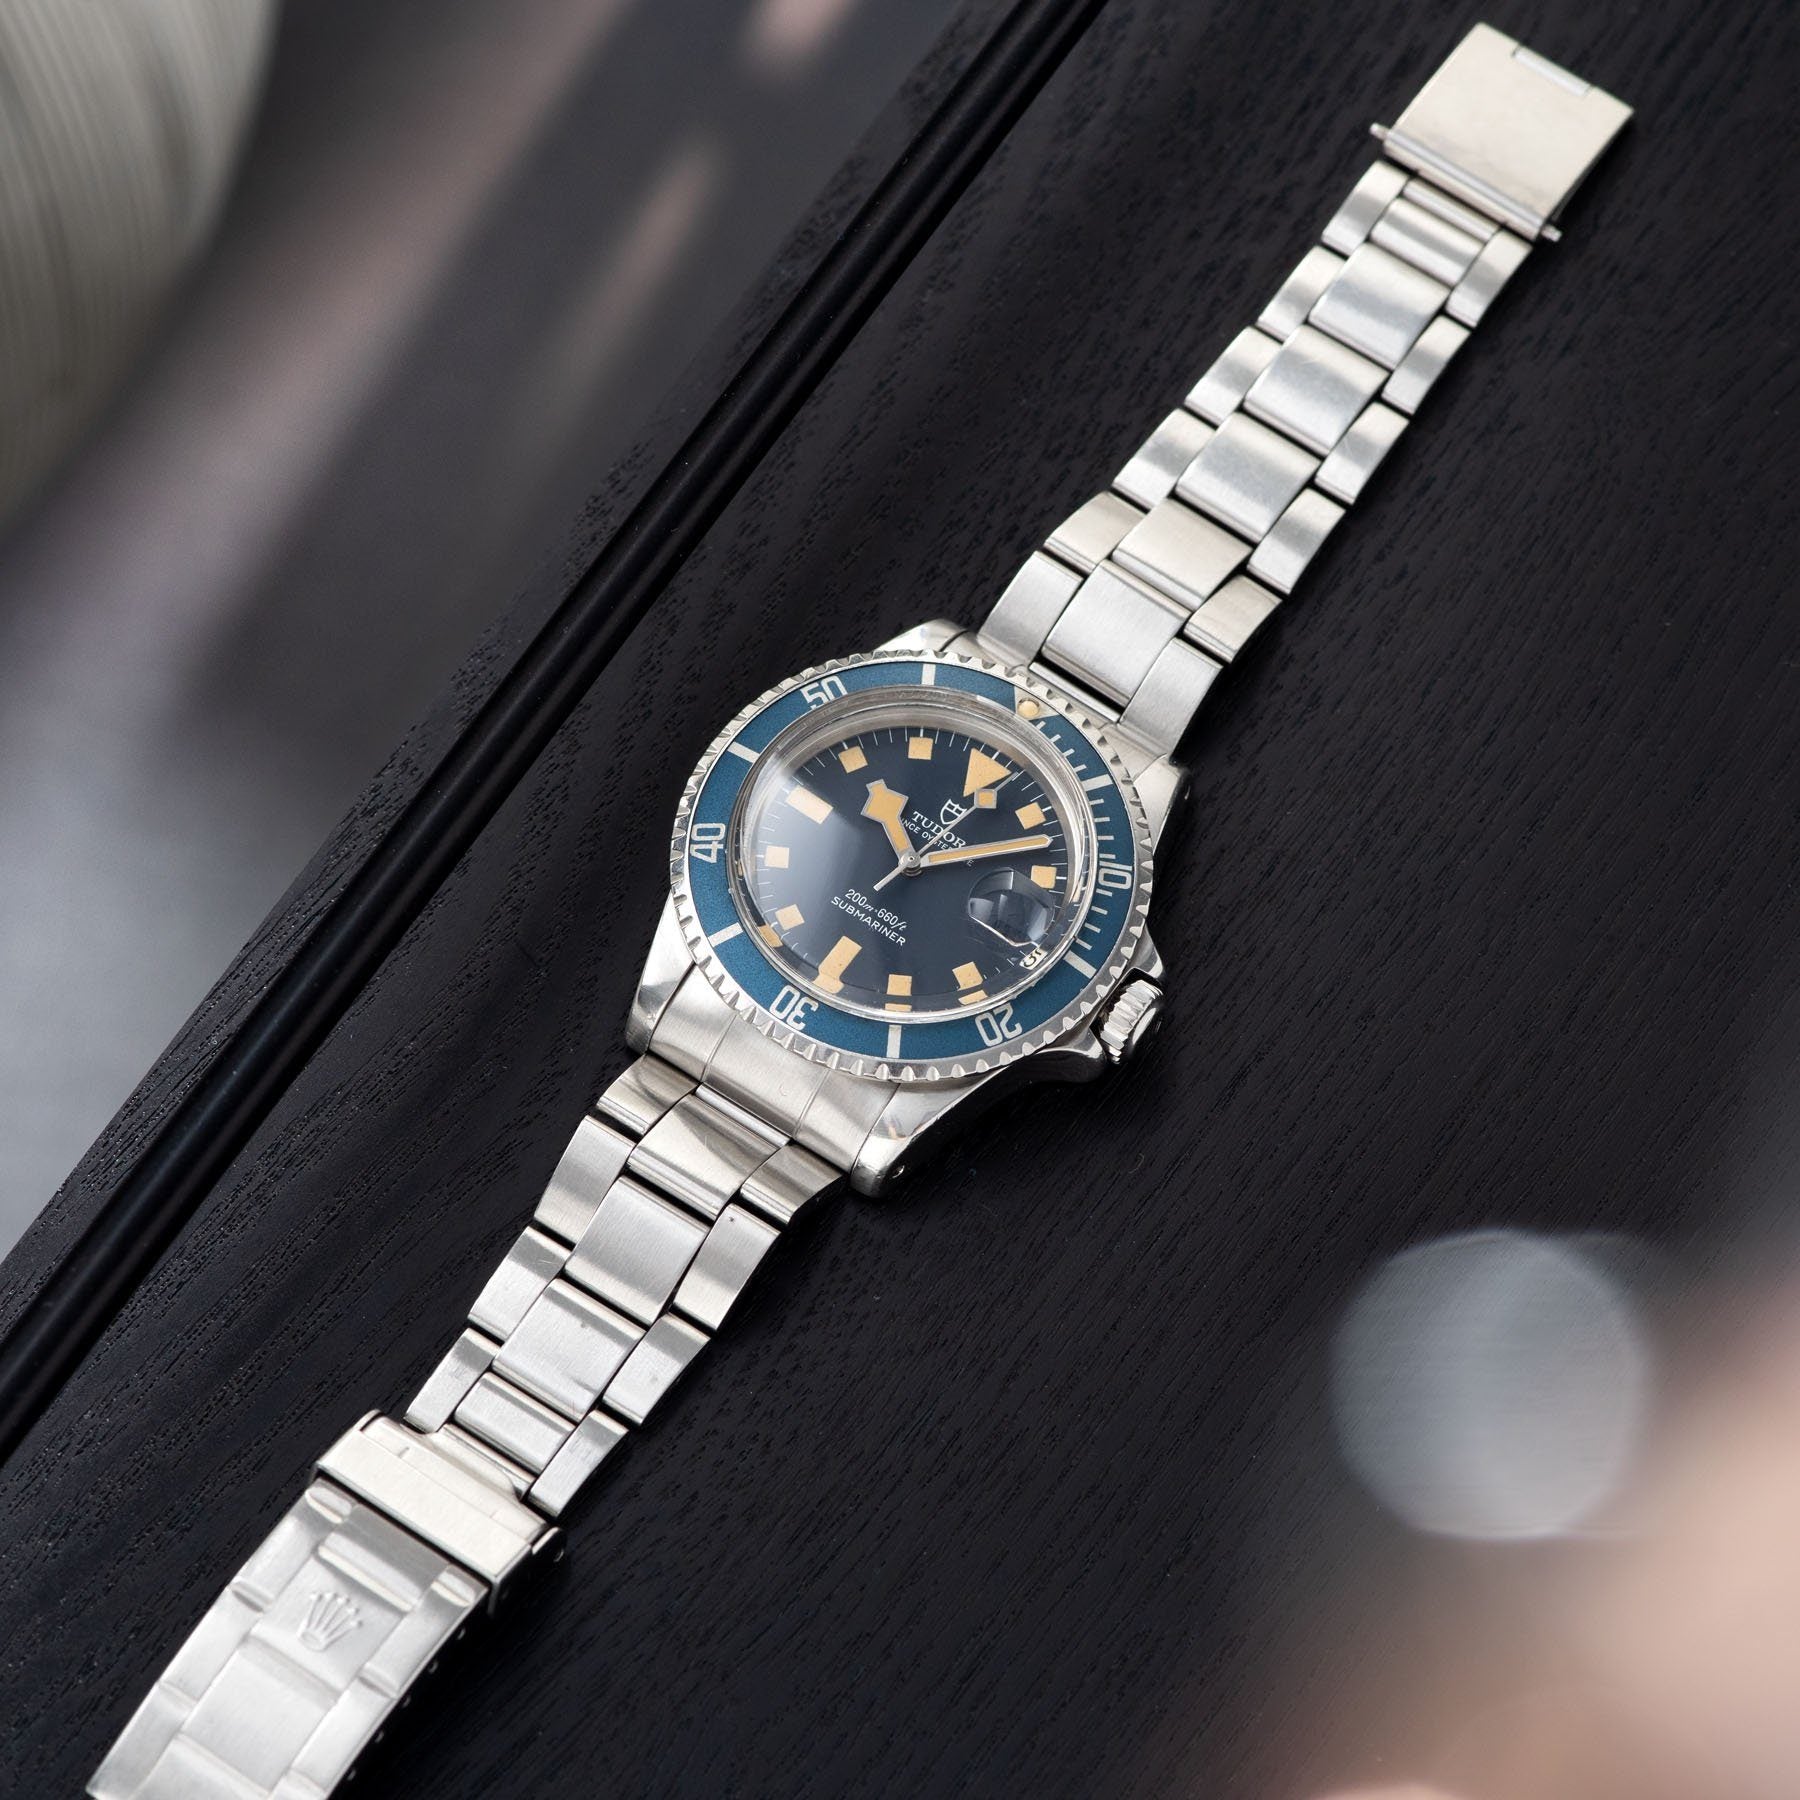 Tudor Submariner Date Blue Snowflake 9411/0 with Rolex 9315 bracelet with 380 endlinks